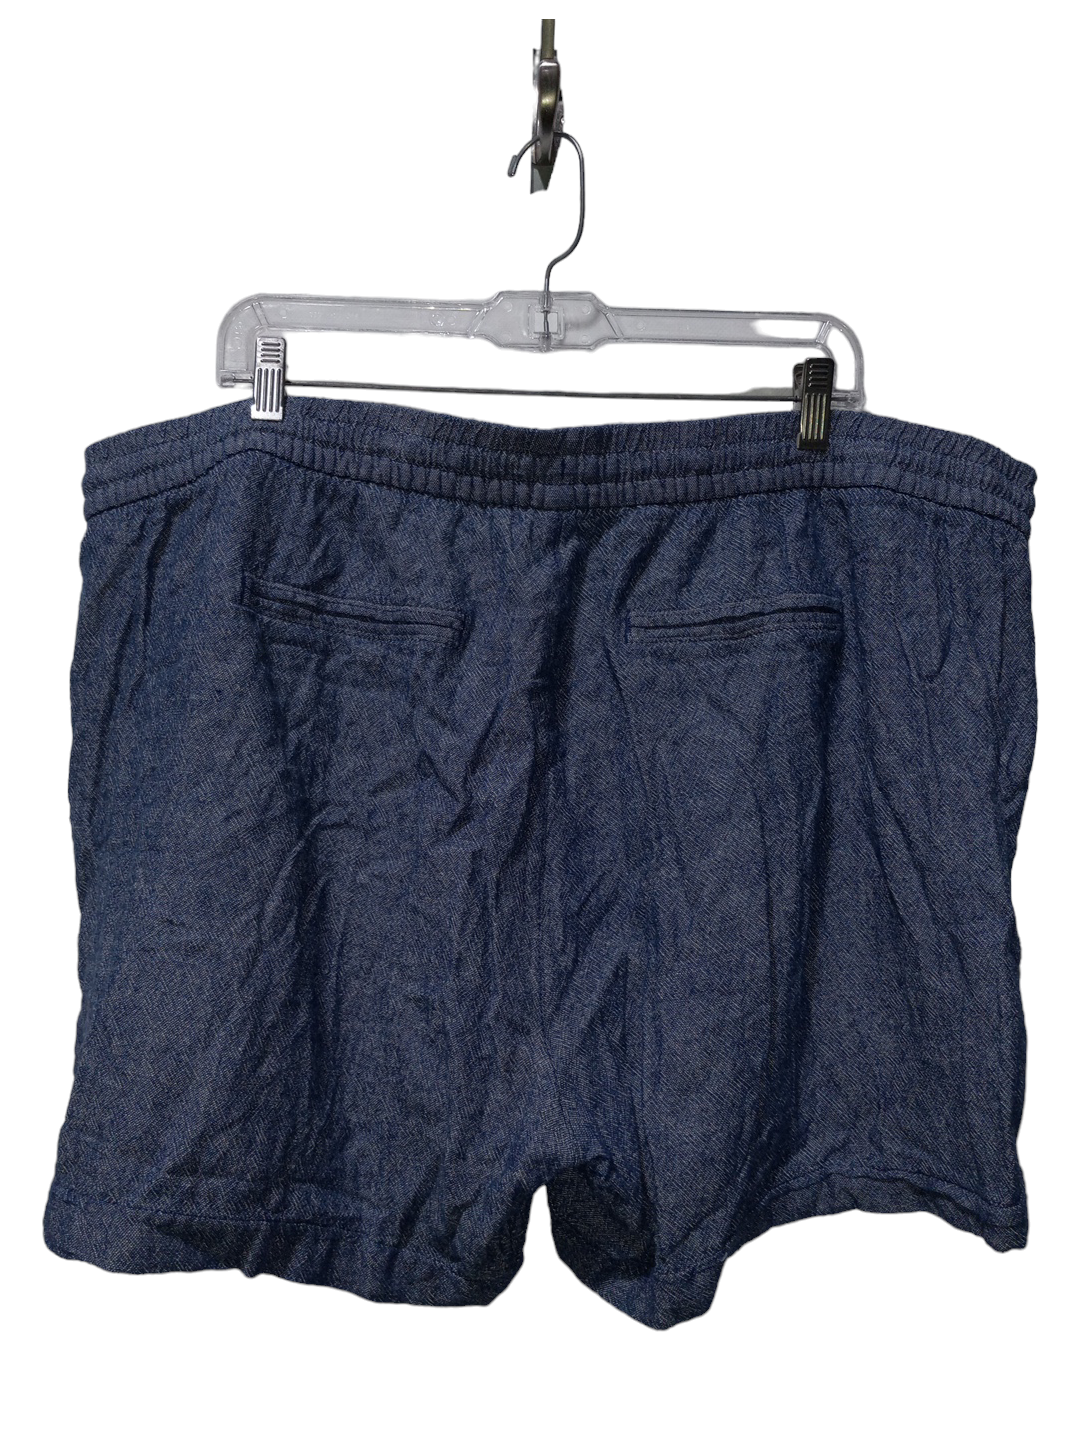 Blue Shorts Old Navy, Size 2x